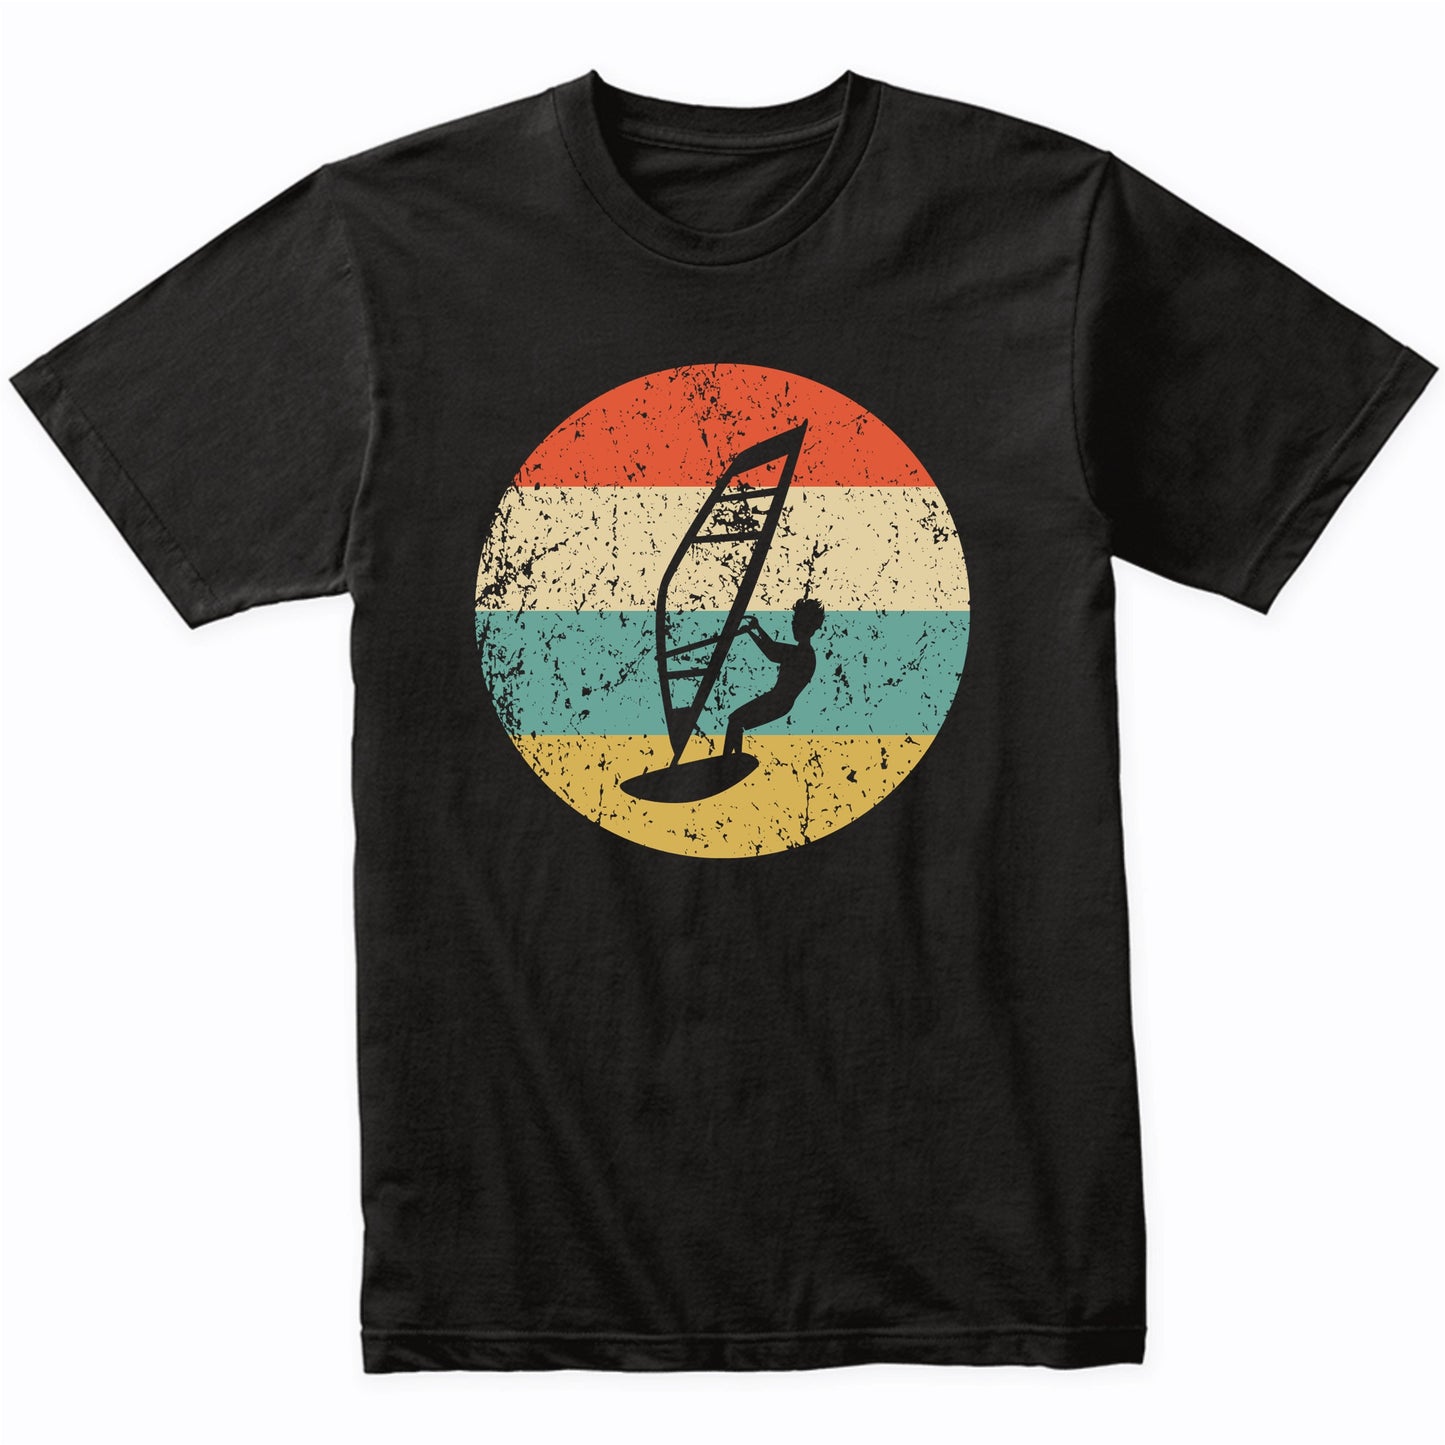 Windsurfing Shirt - Vintage Retro Windsurfer T-Shirt